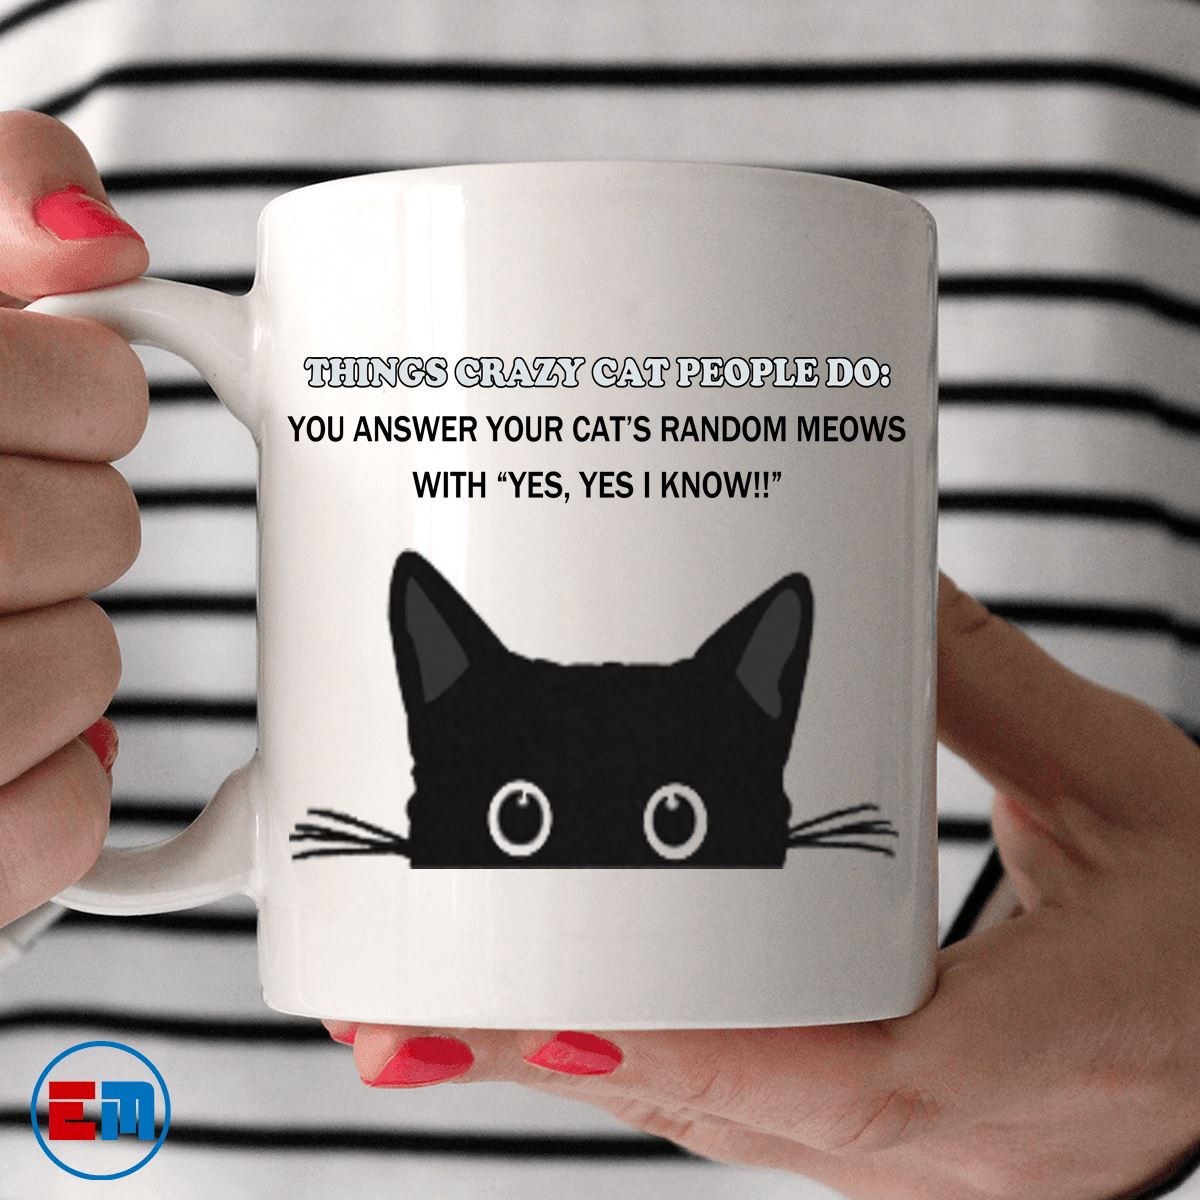 Cat Mug - Thing Crazy Cat People Do - CatsForLife